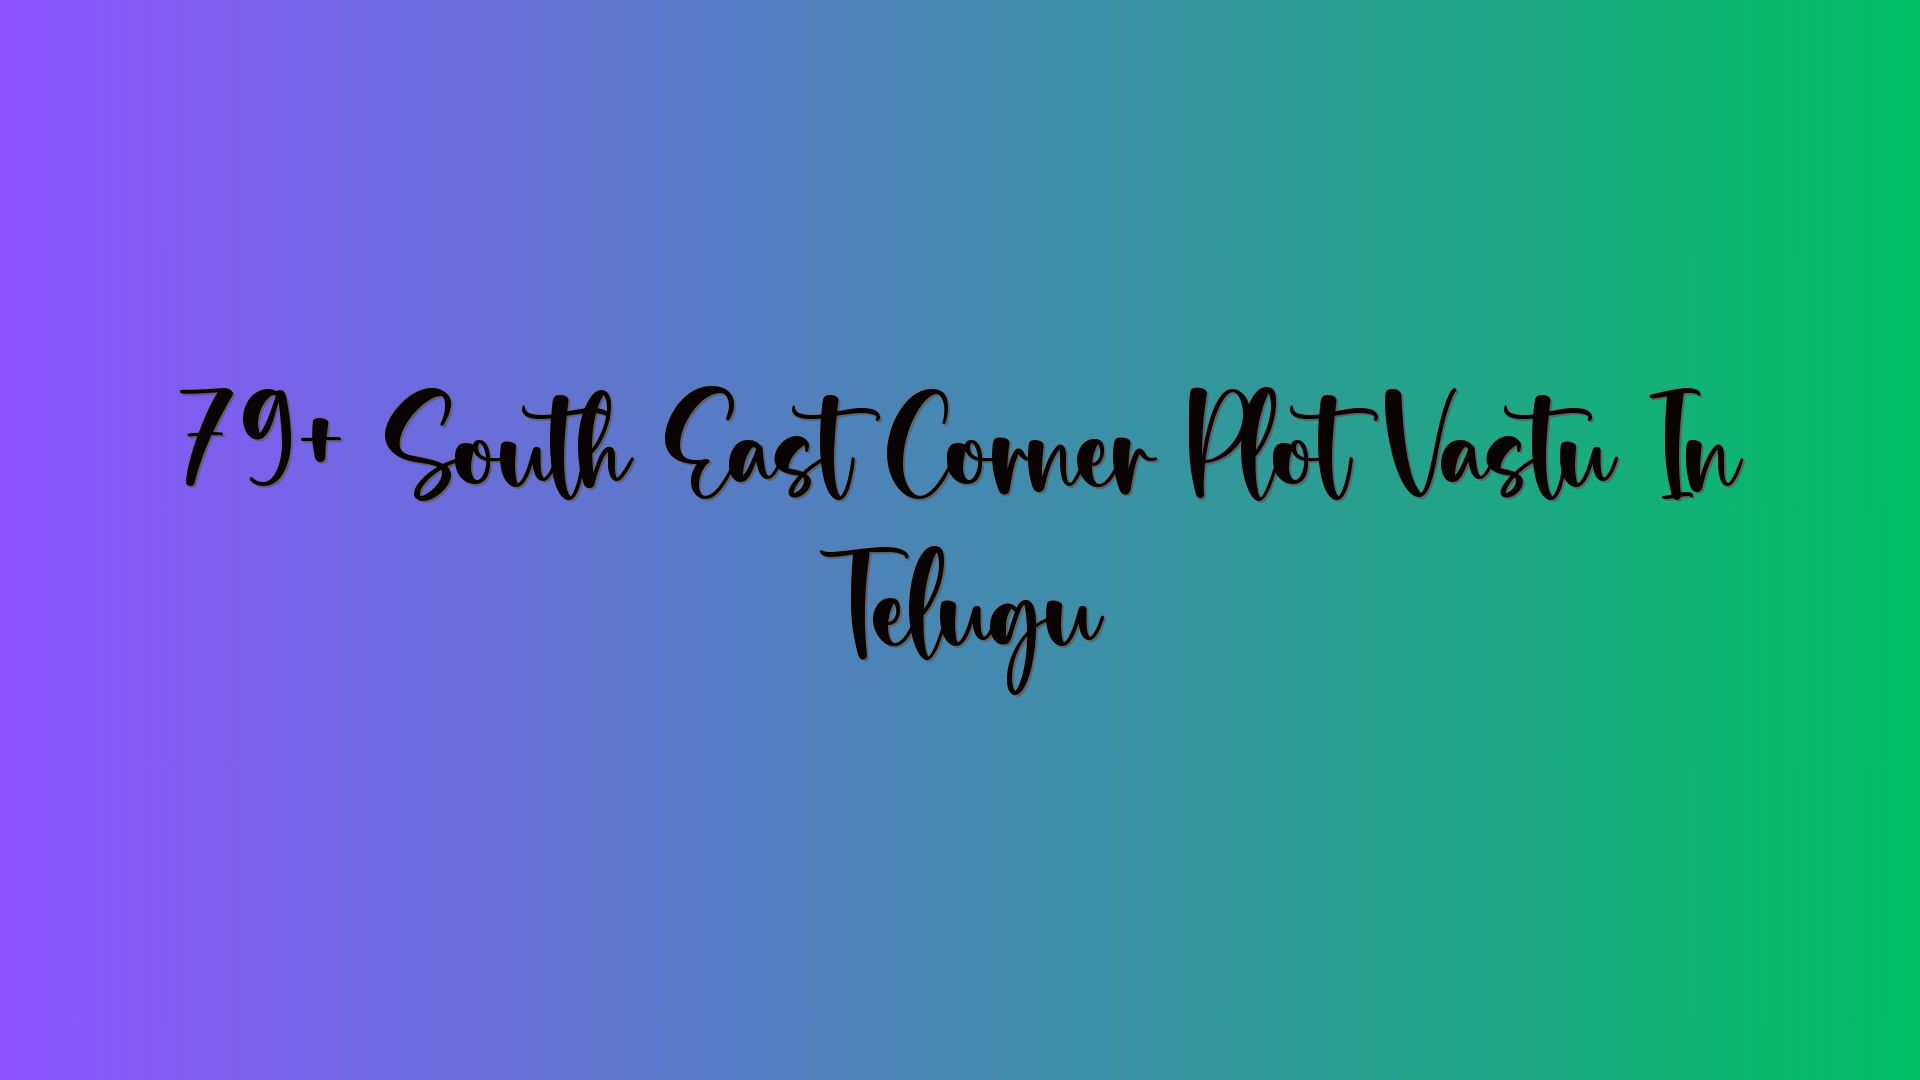 79+ South East Corner Plot Vastu In Telugu